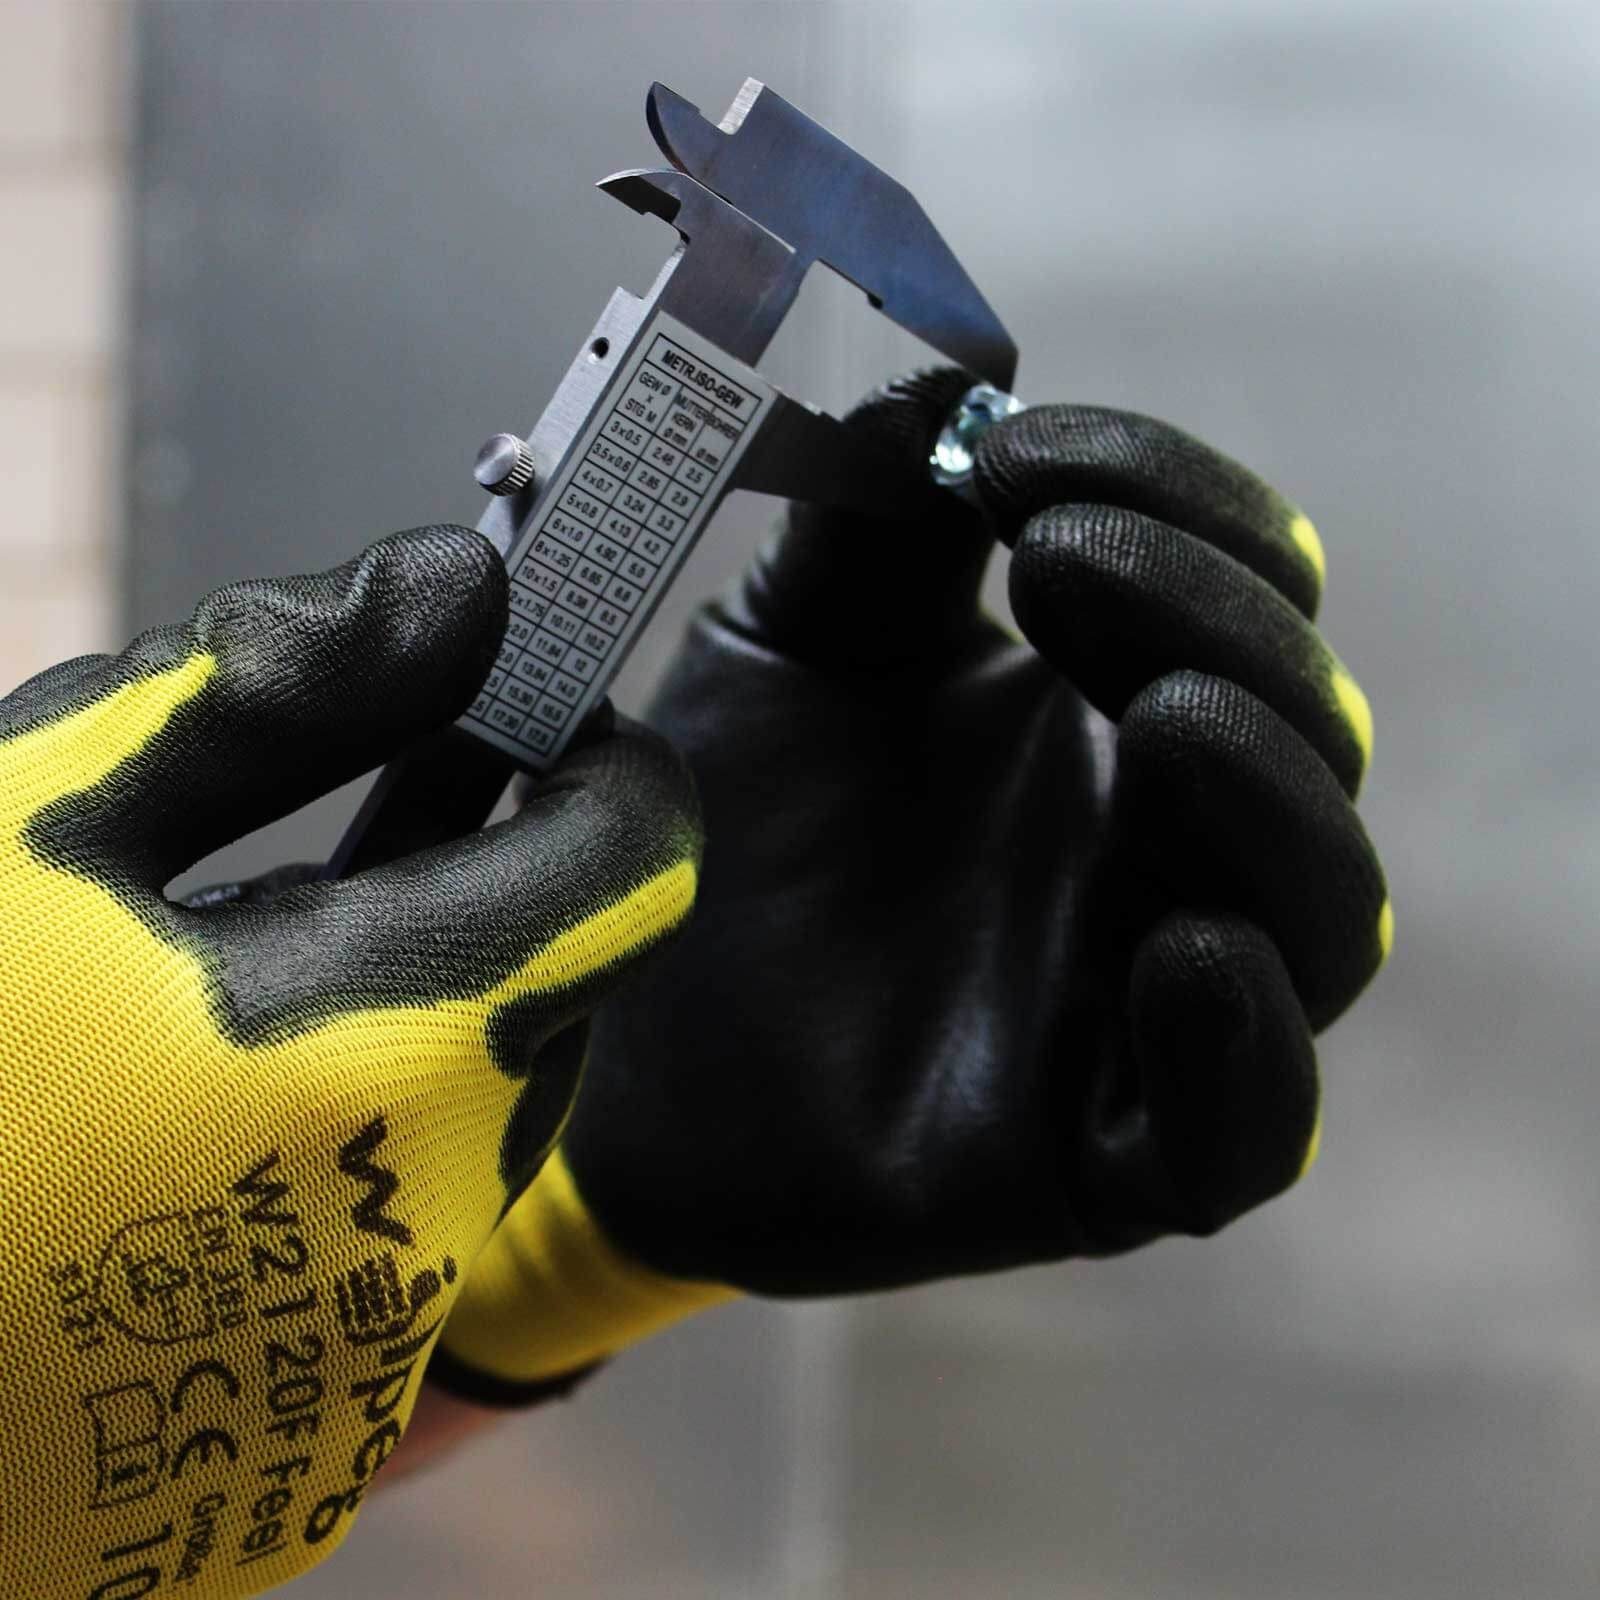 Paar W2120F Handschuhe - wilpeg® (Spar-Set) PU Feel schwarz/gelb Nitril-Handschuhe WILPEG Nylon-Strickhandschuhe, 12